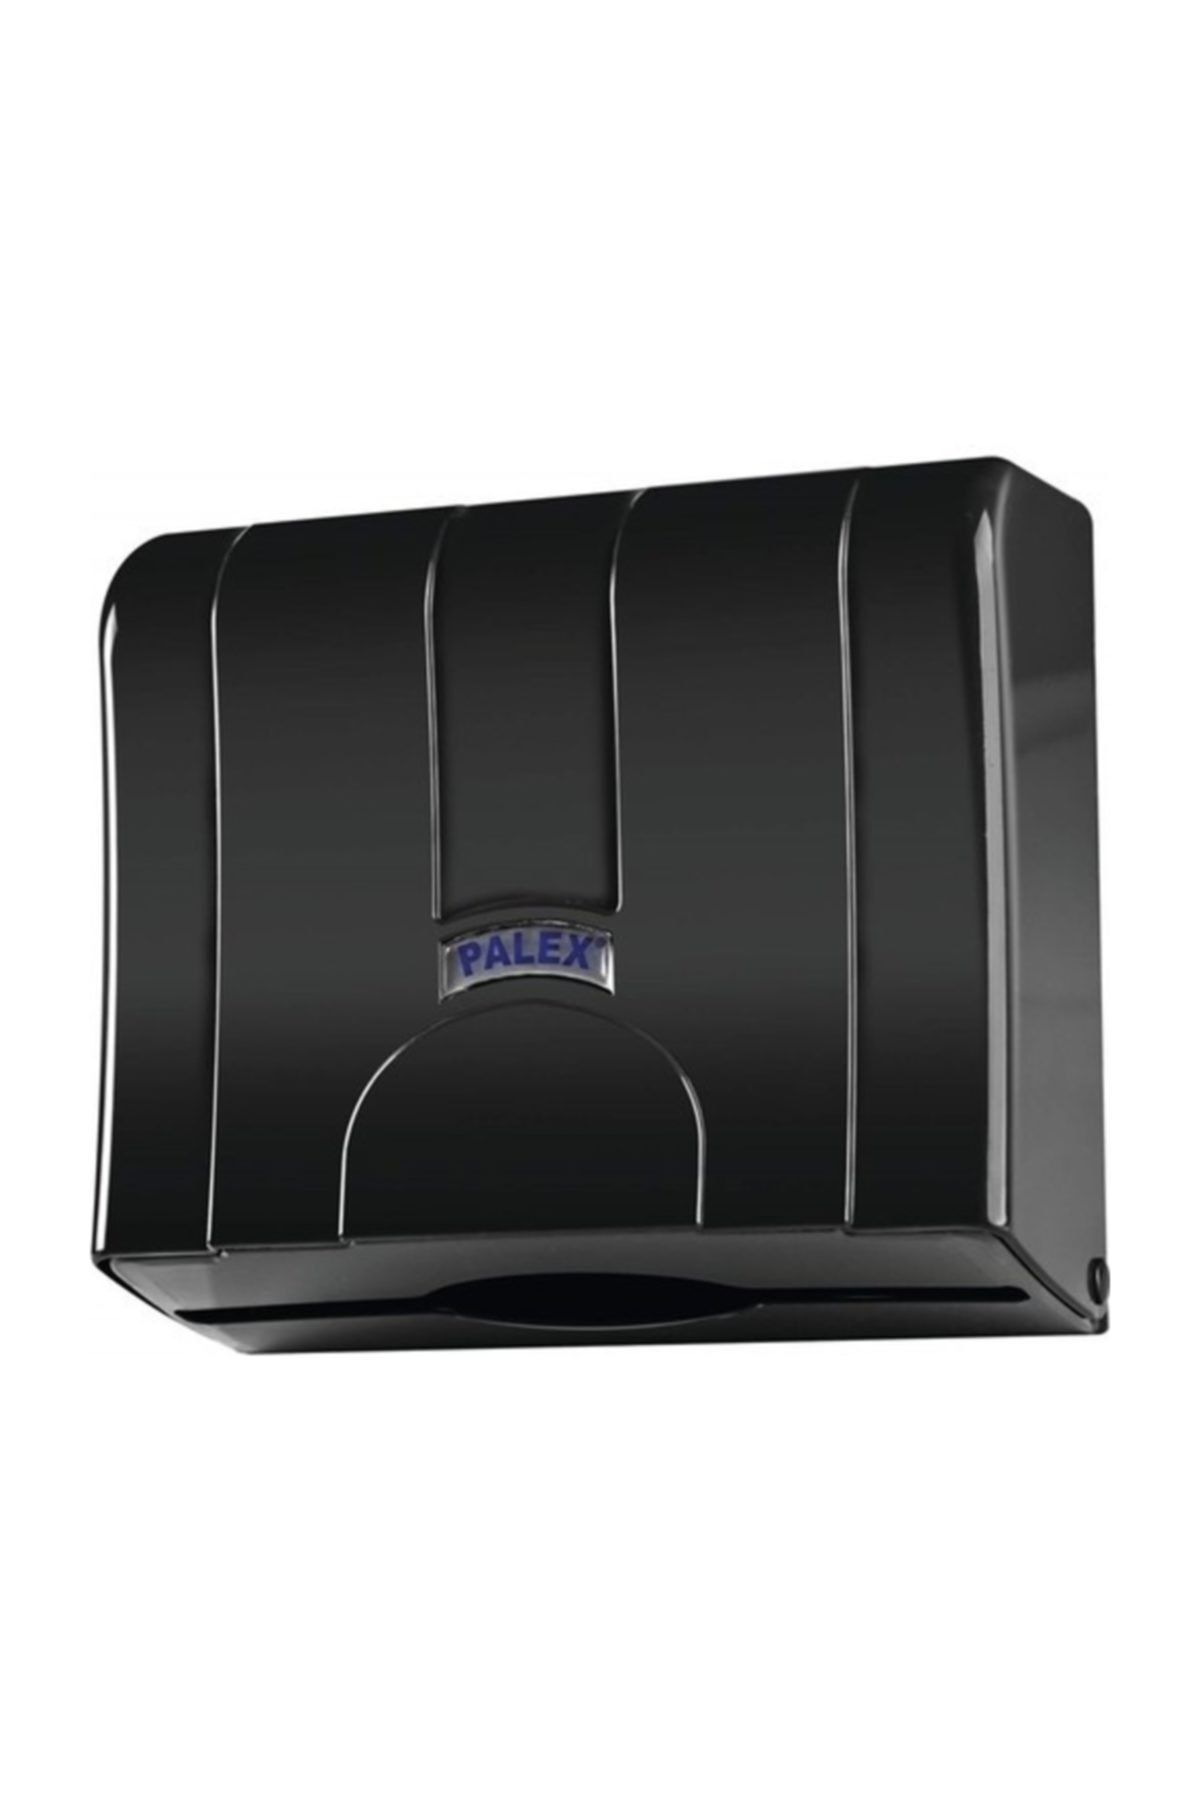 Palex 3570-s Standart Z Katlı Kağıt Havlu Dispenseri Siyah